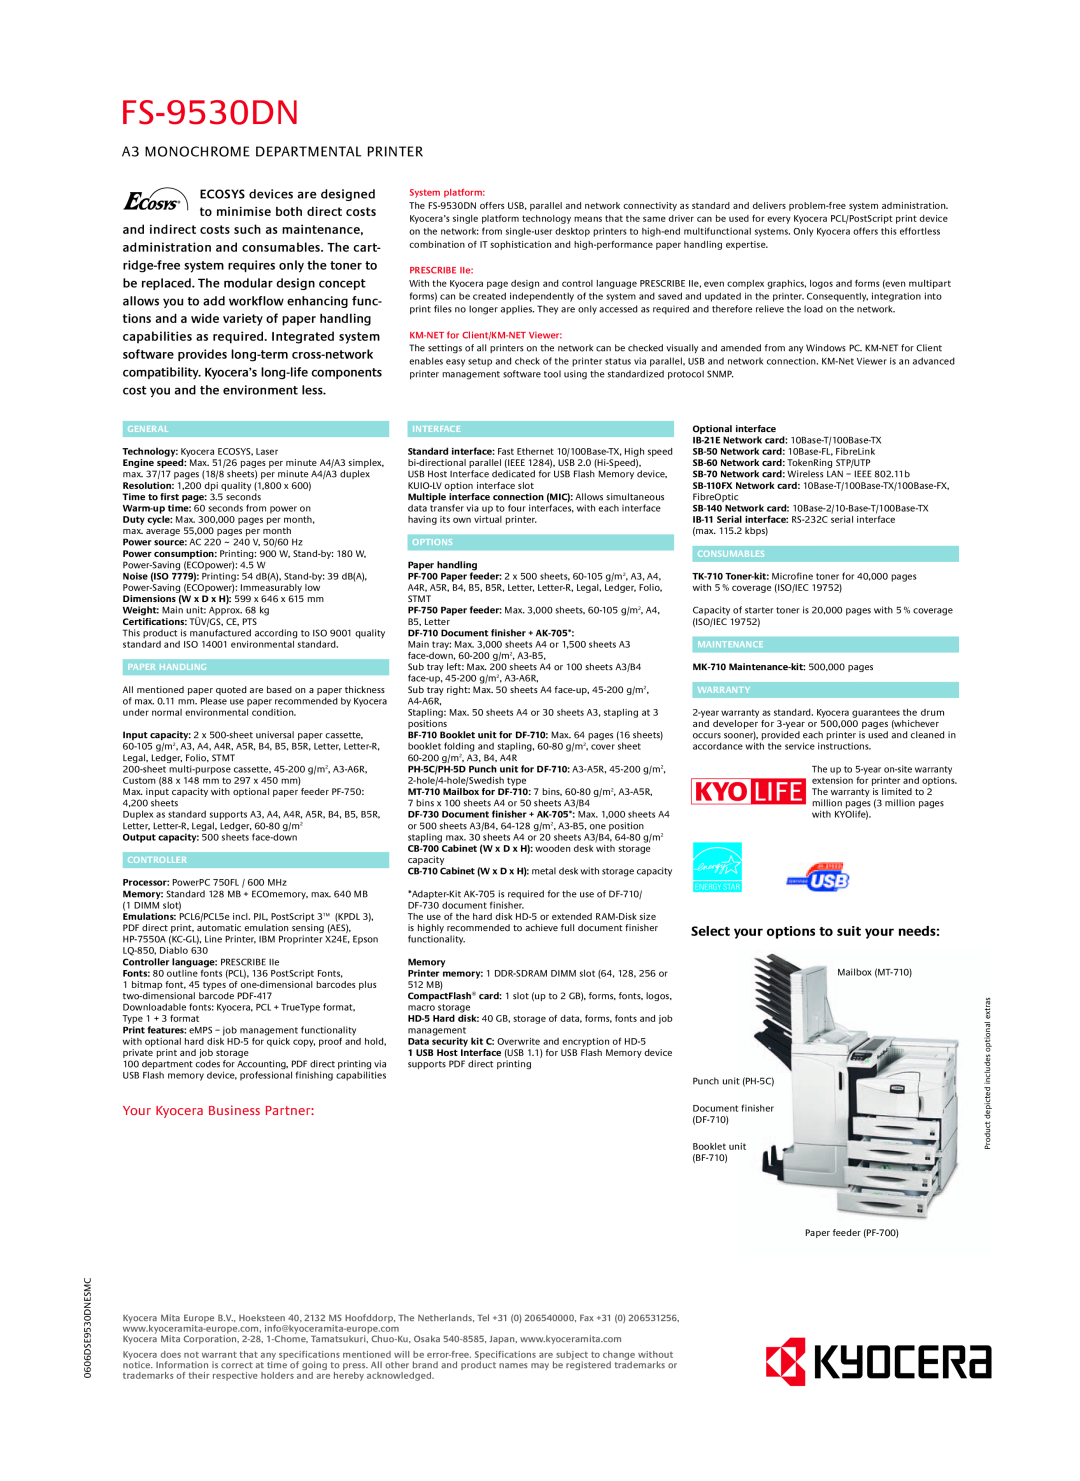 Kyocera FS-9530DN manual A3 MONOCHROME DEPARTMENTAL PRINTER, Your Kyocera Business Partner, System platform, PRESCRIBE IIe 